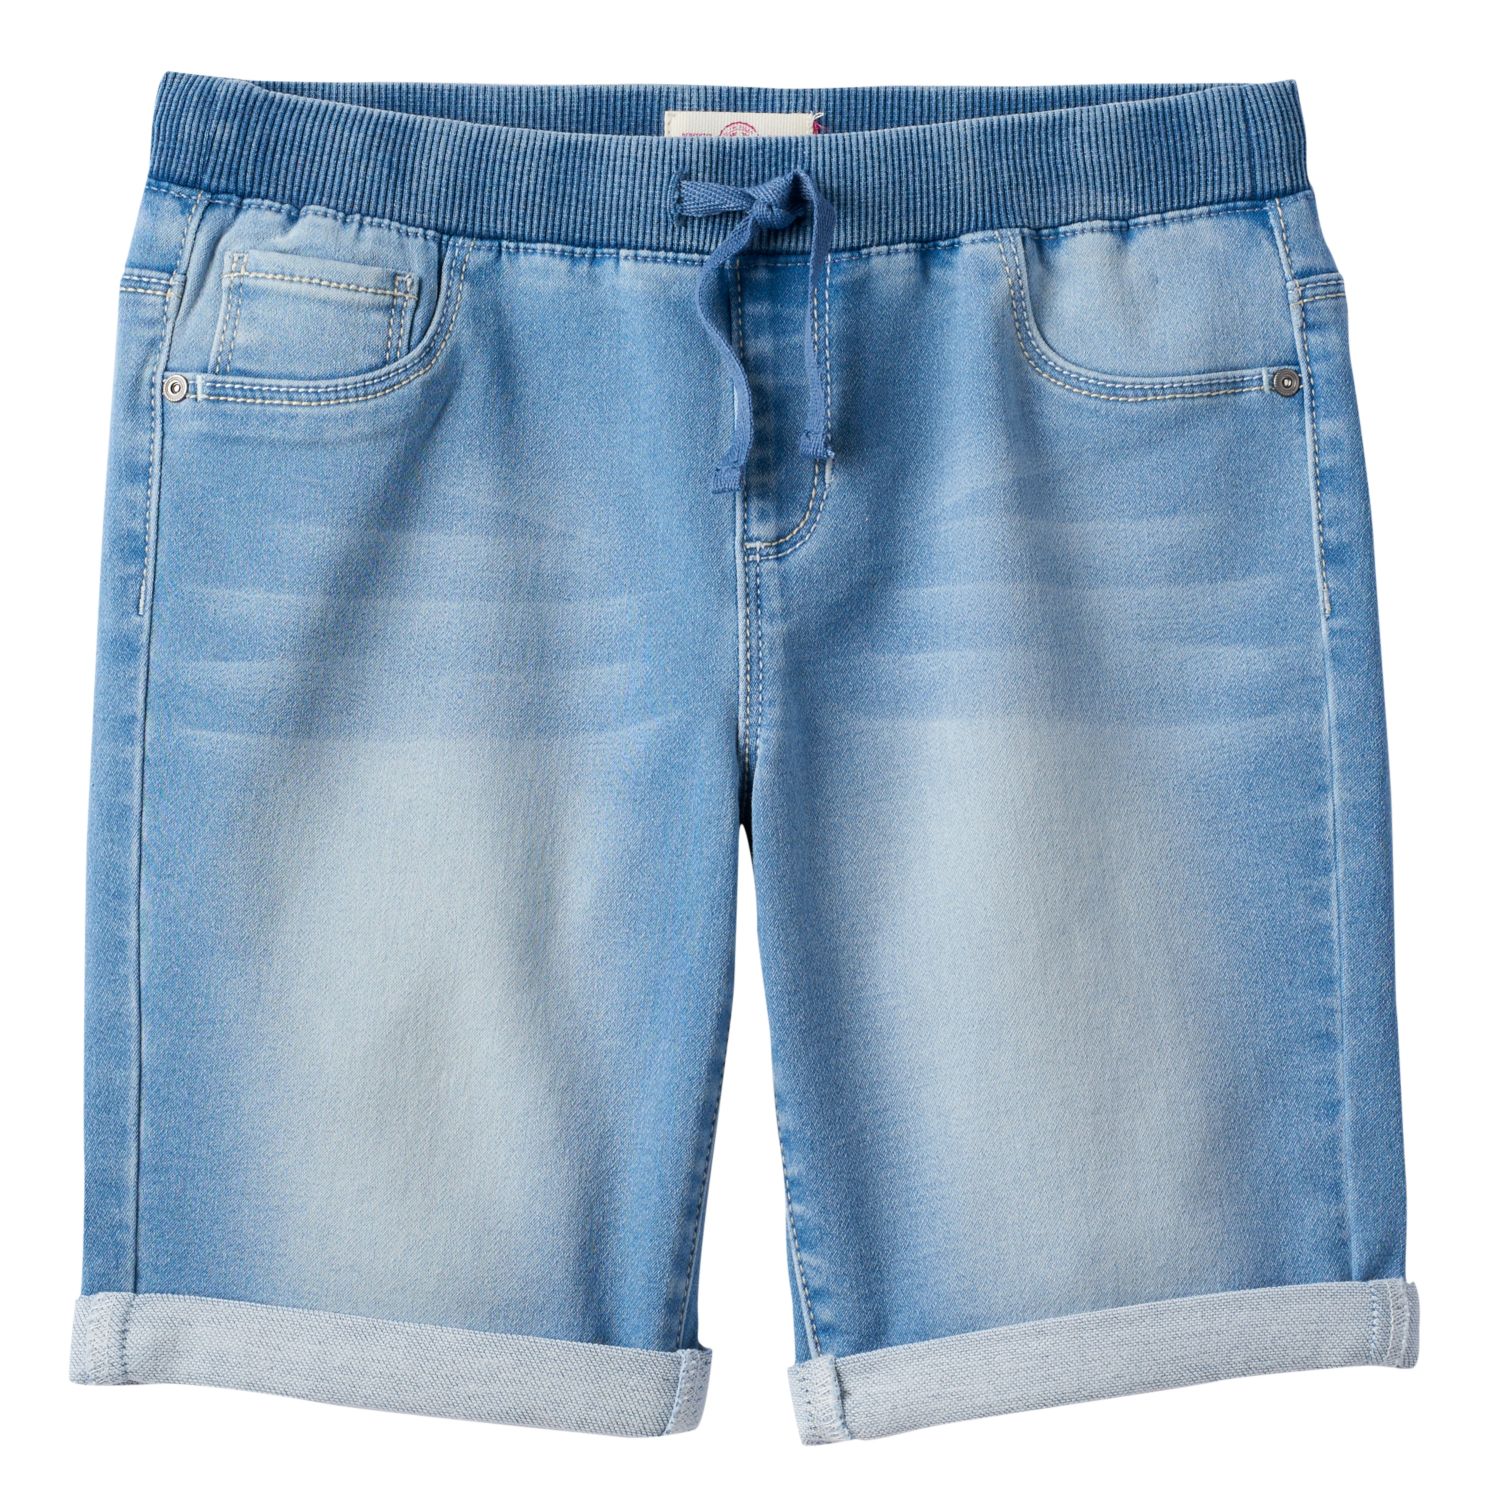 size 16 jean shorts